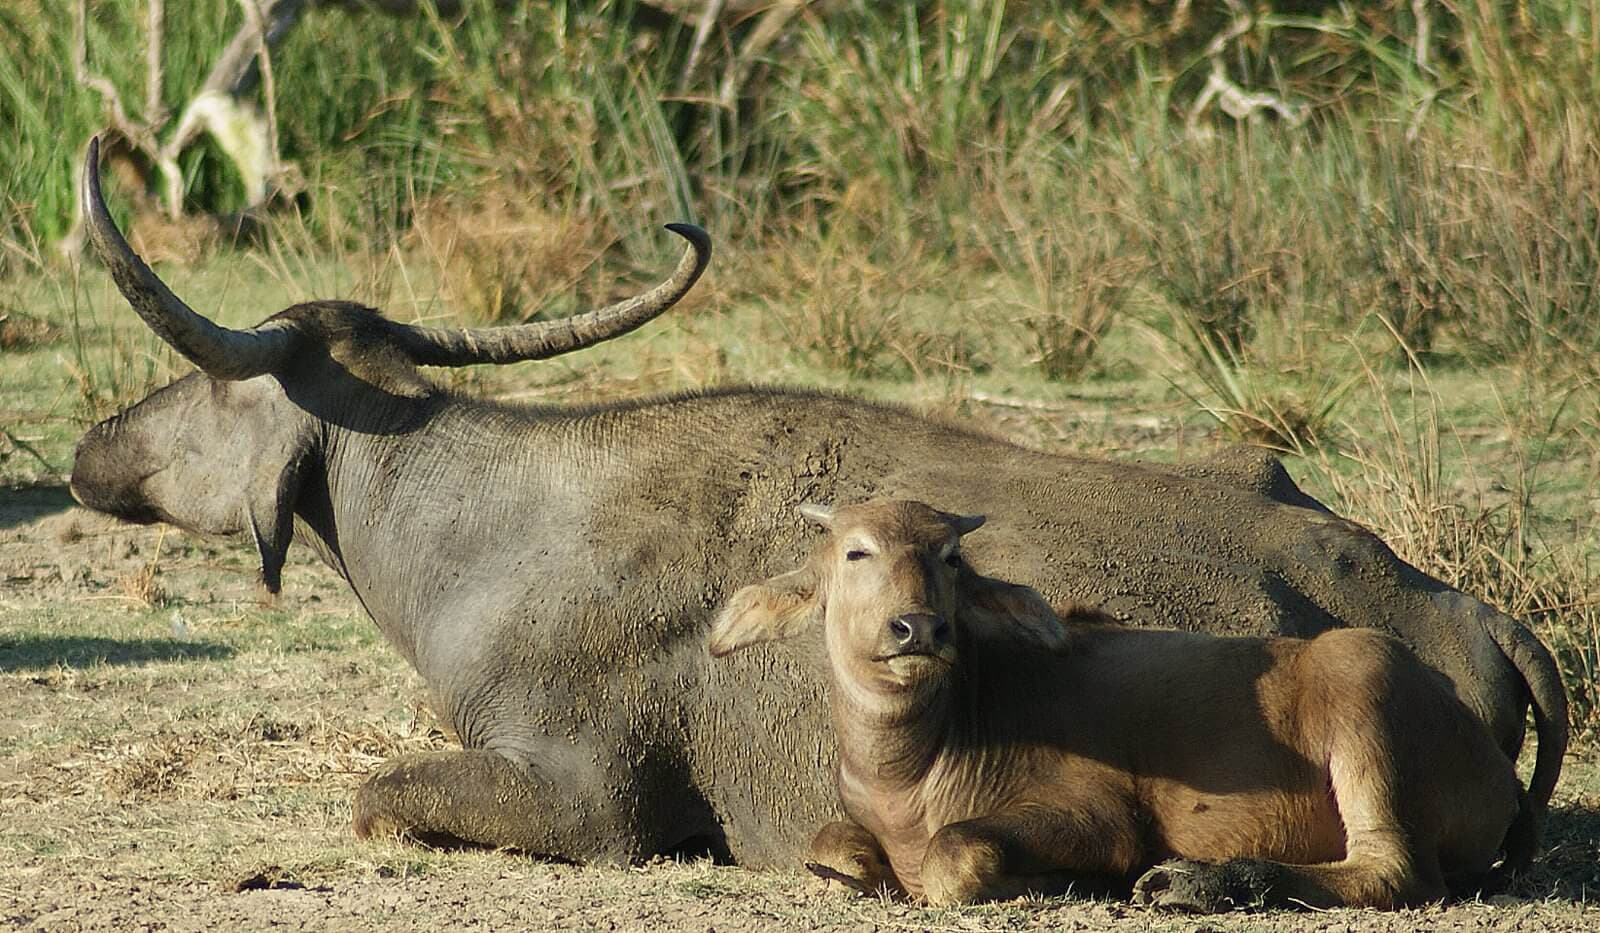 Wild animals relaxing in the Yala national park, Sri Lanka.